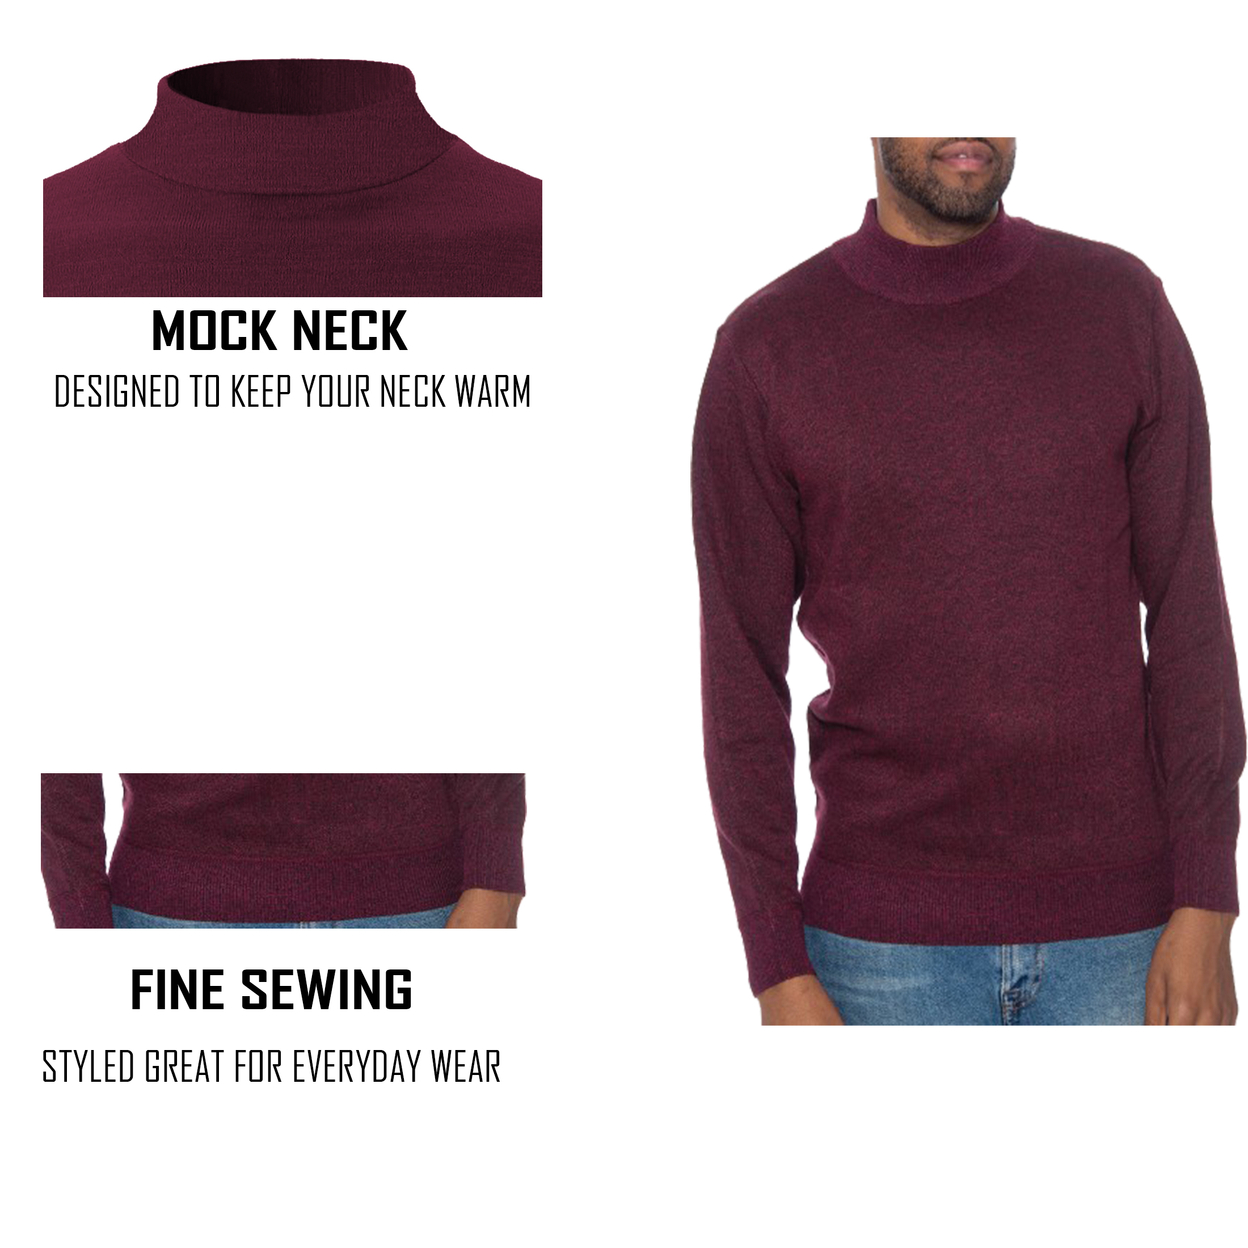 2-Pack: Men's Winter Warm Cozy Knit Slim Fit Mock Neck Sweater - Black& Burgundy, Xx-large